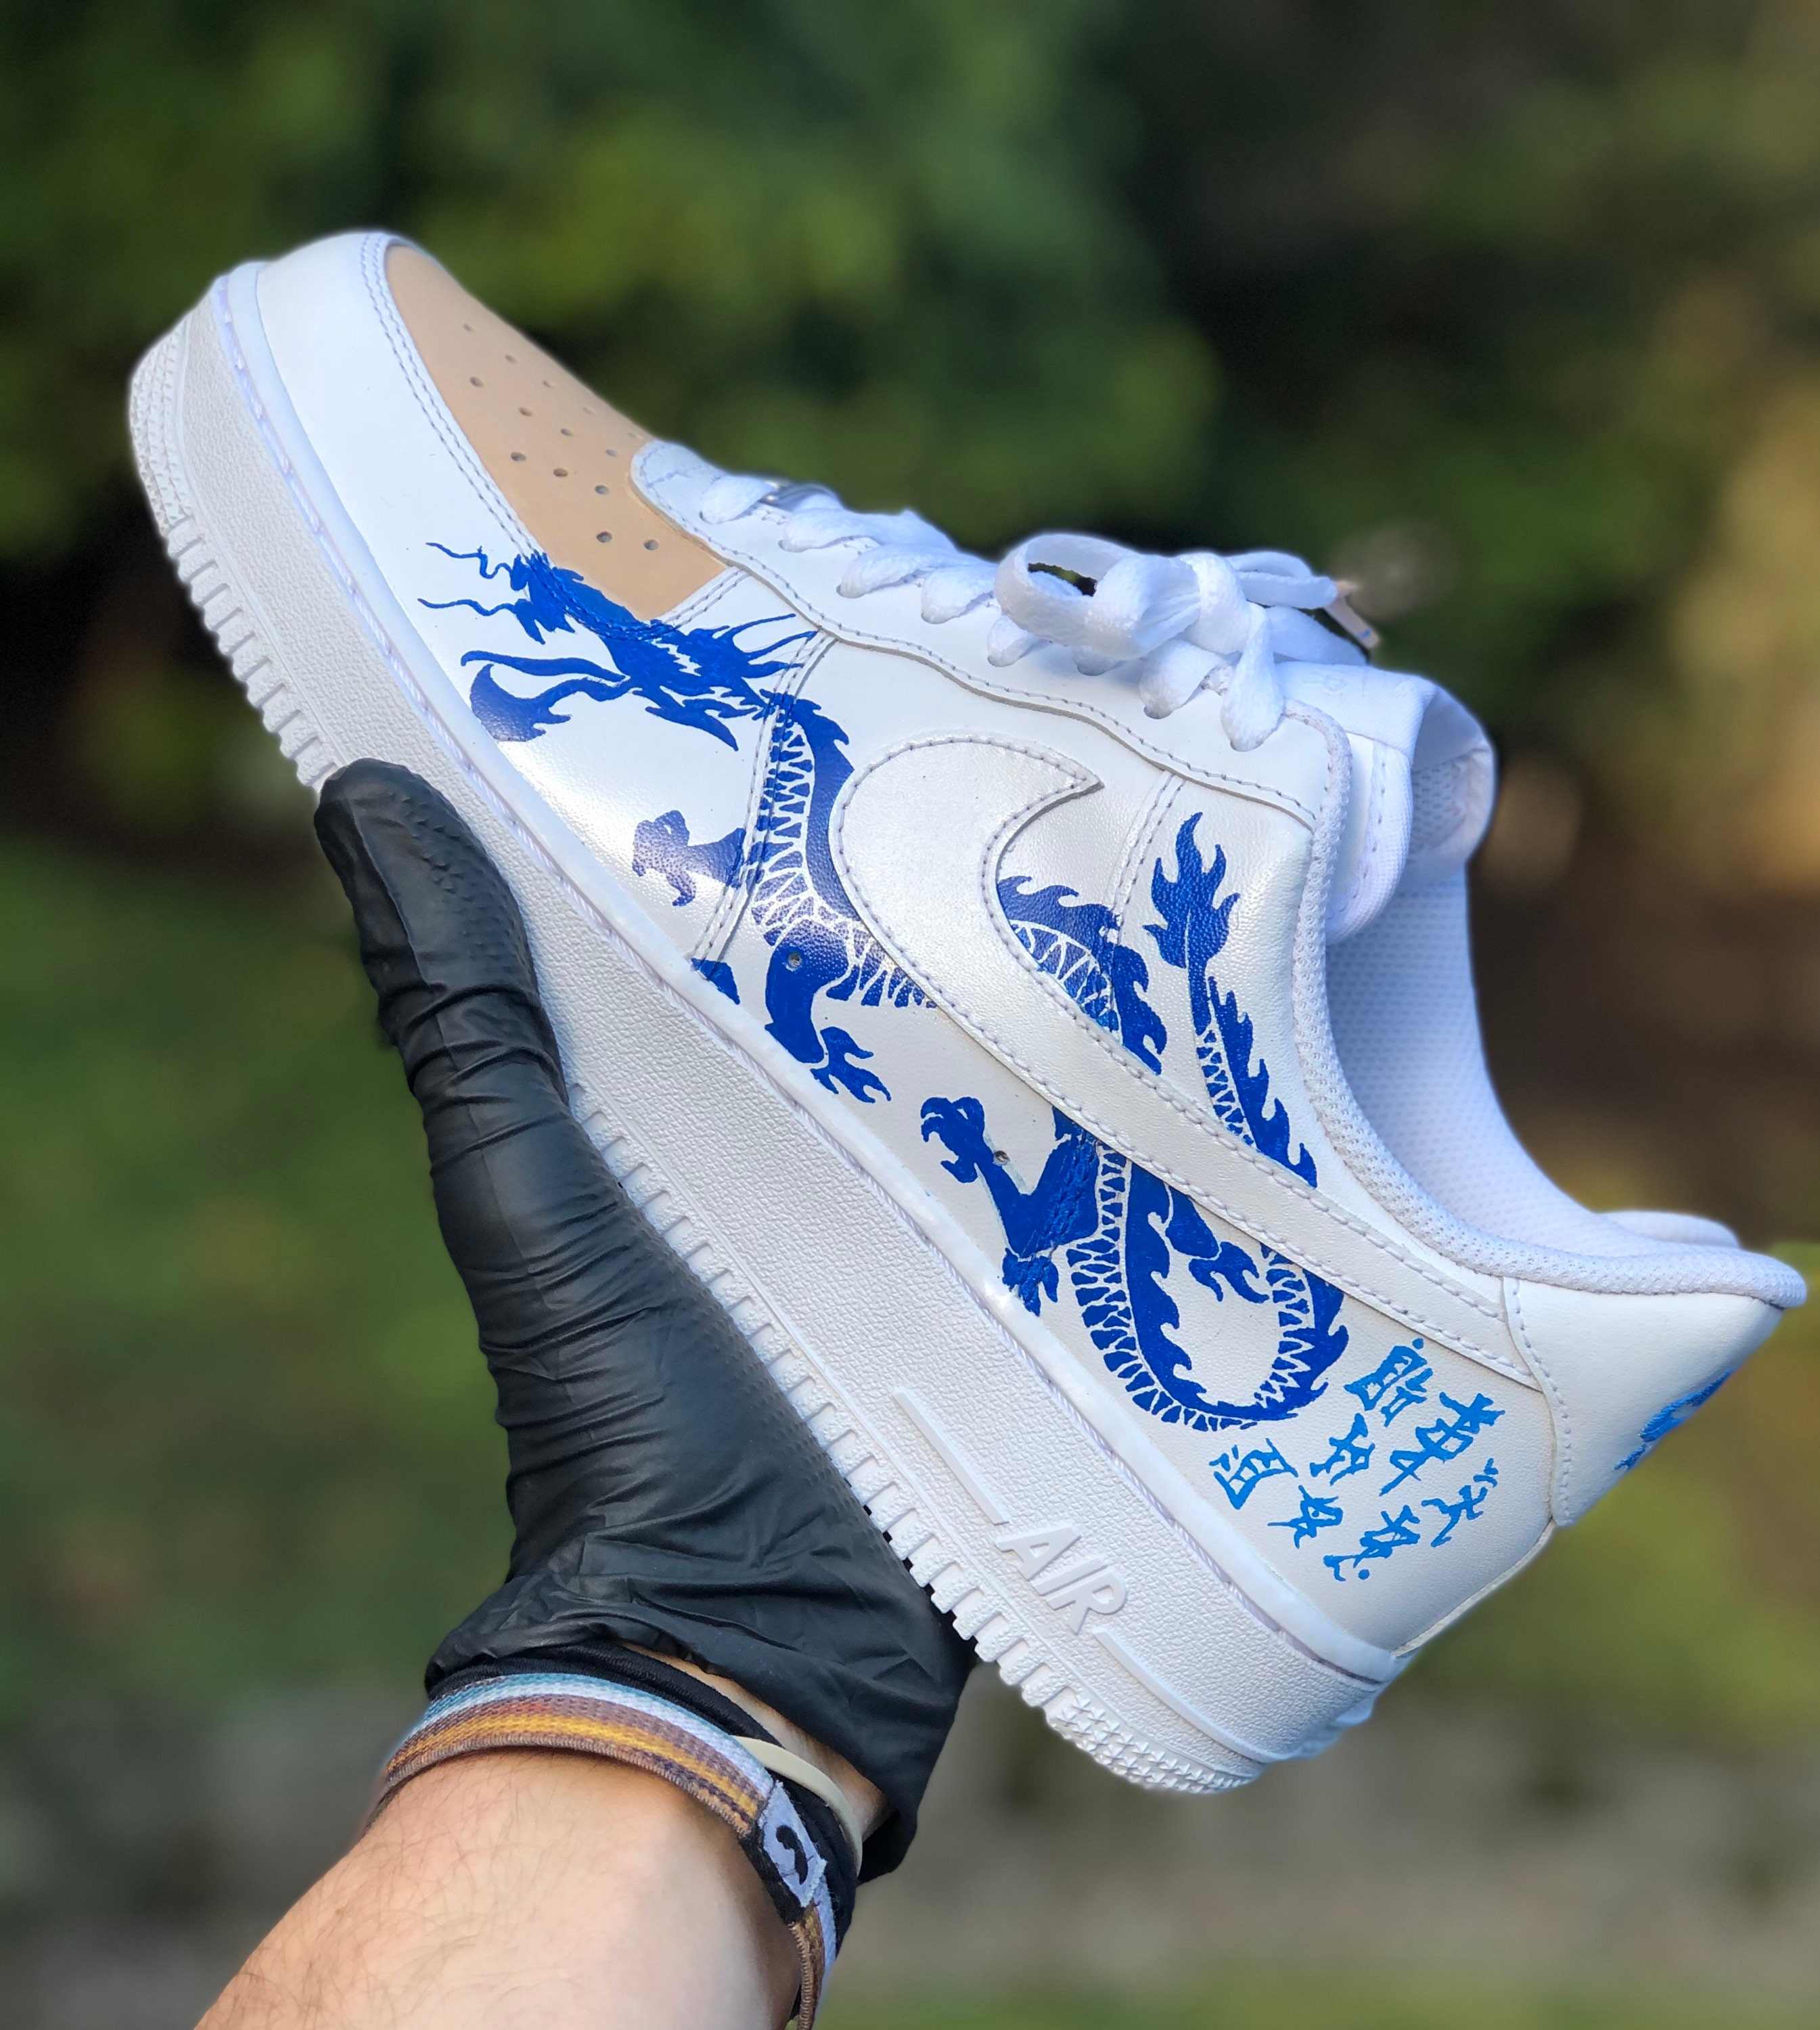 Custom Nike Air Force 1 Shoes Waves